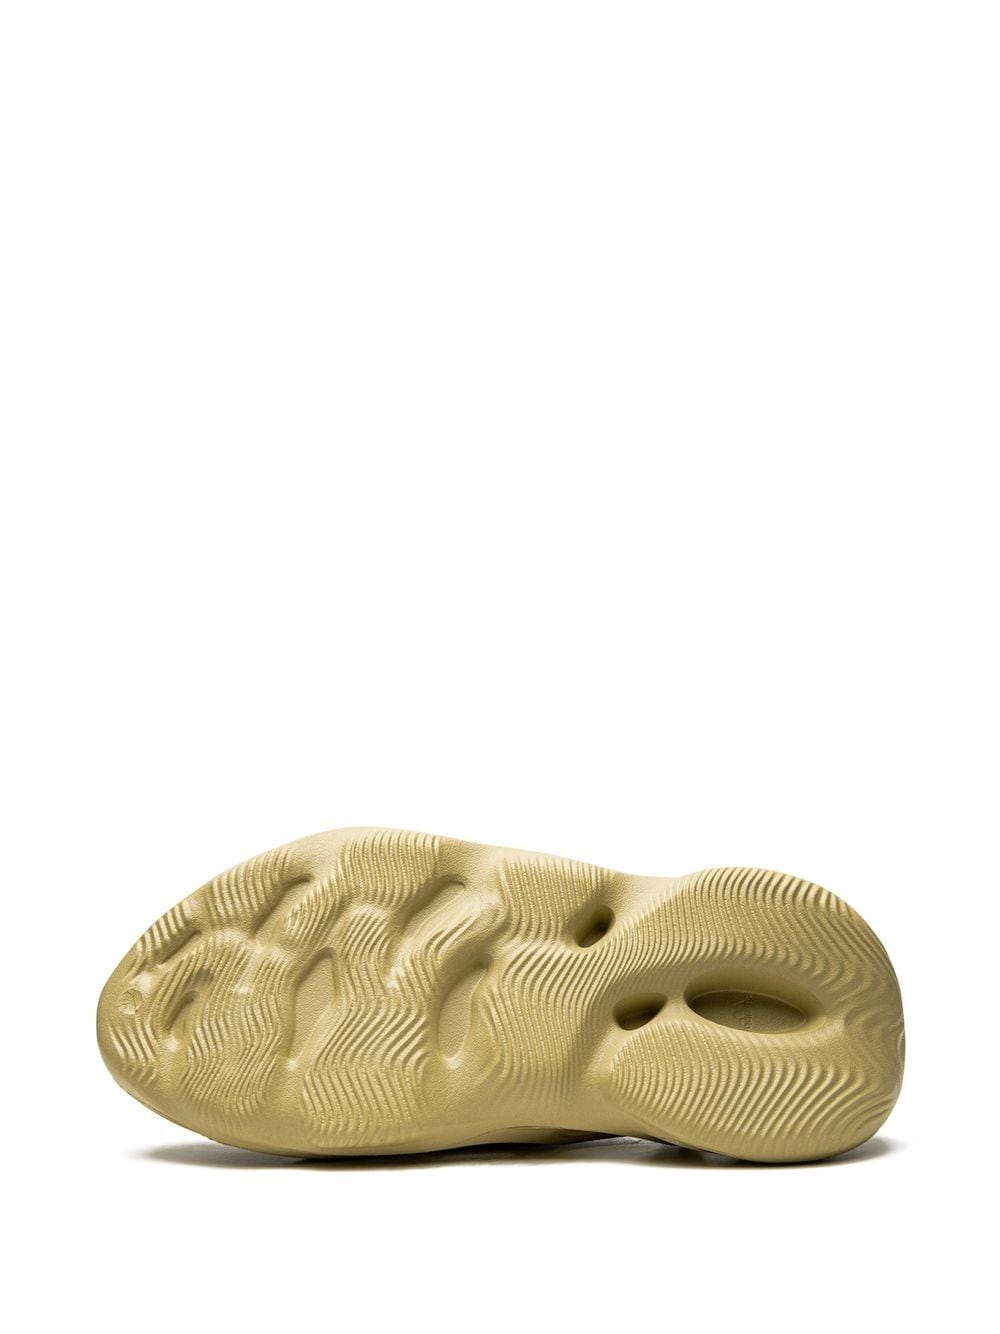 Shop Adidas Originals Yeezy Foam Runner "sulfur" Sneakers In Brown